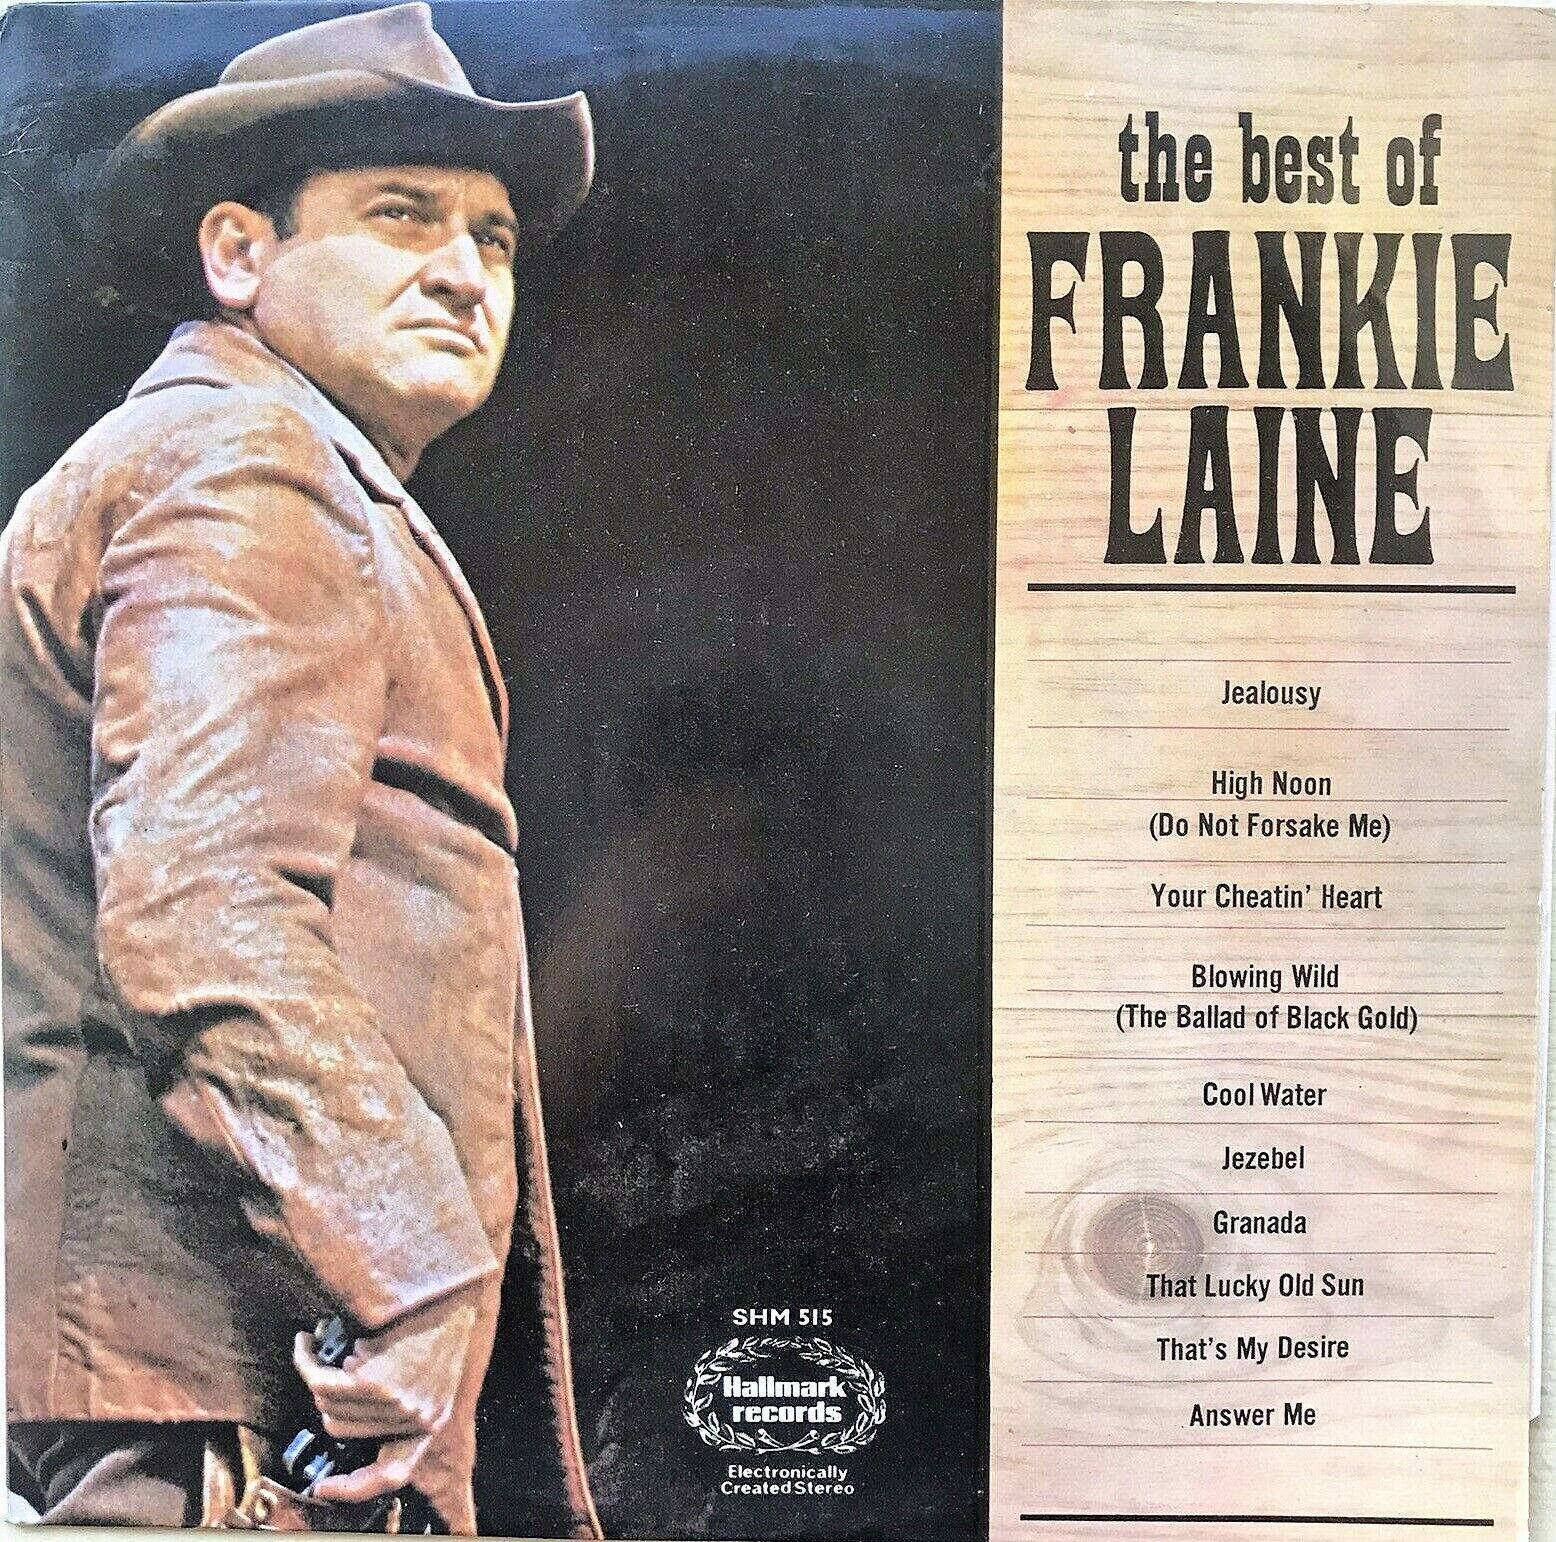 The Best Frankie Laine Album Cover Wallpaper